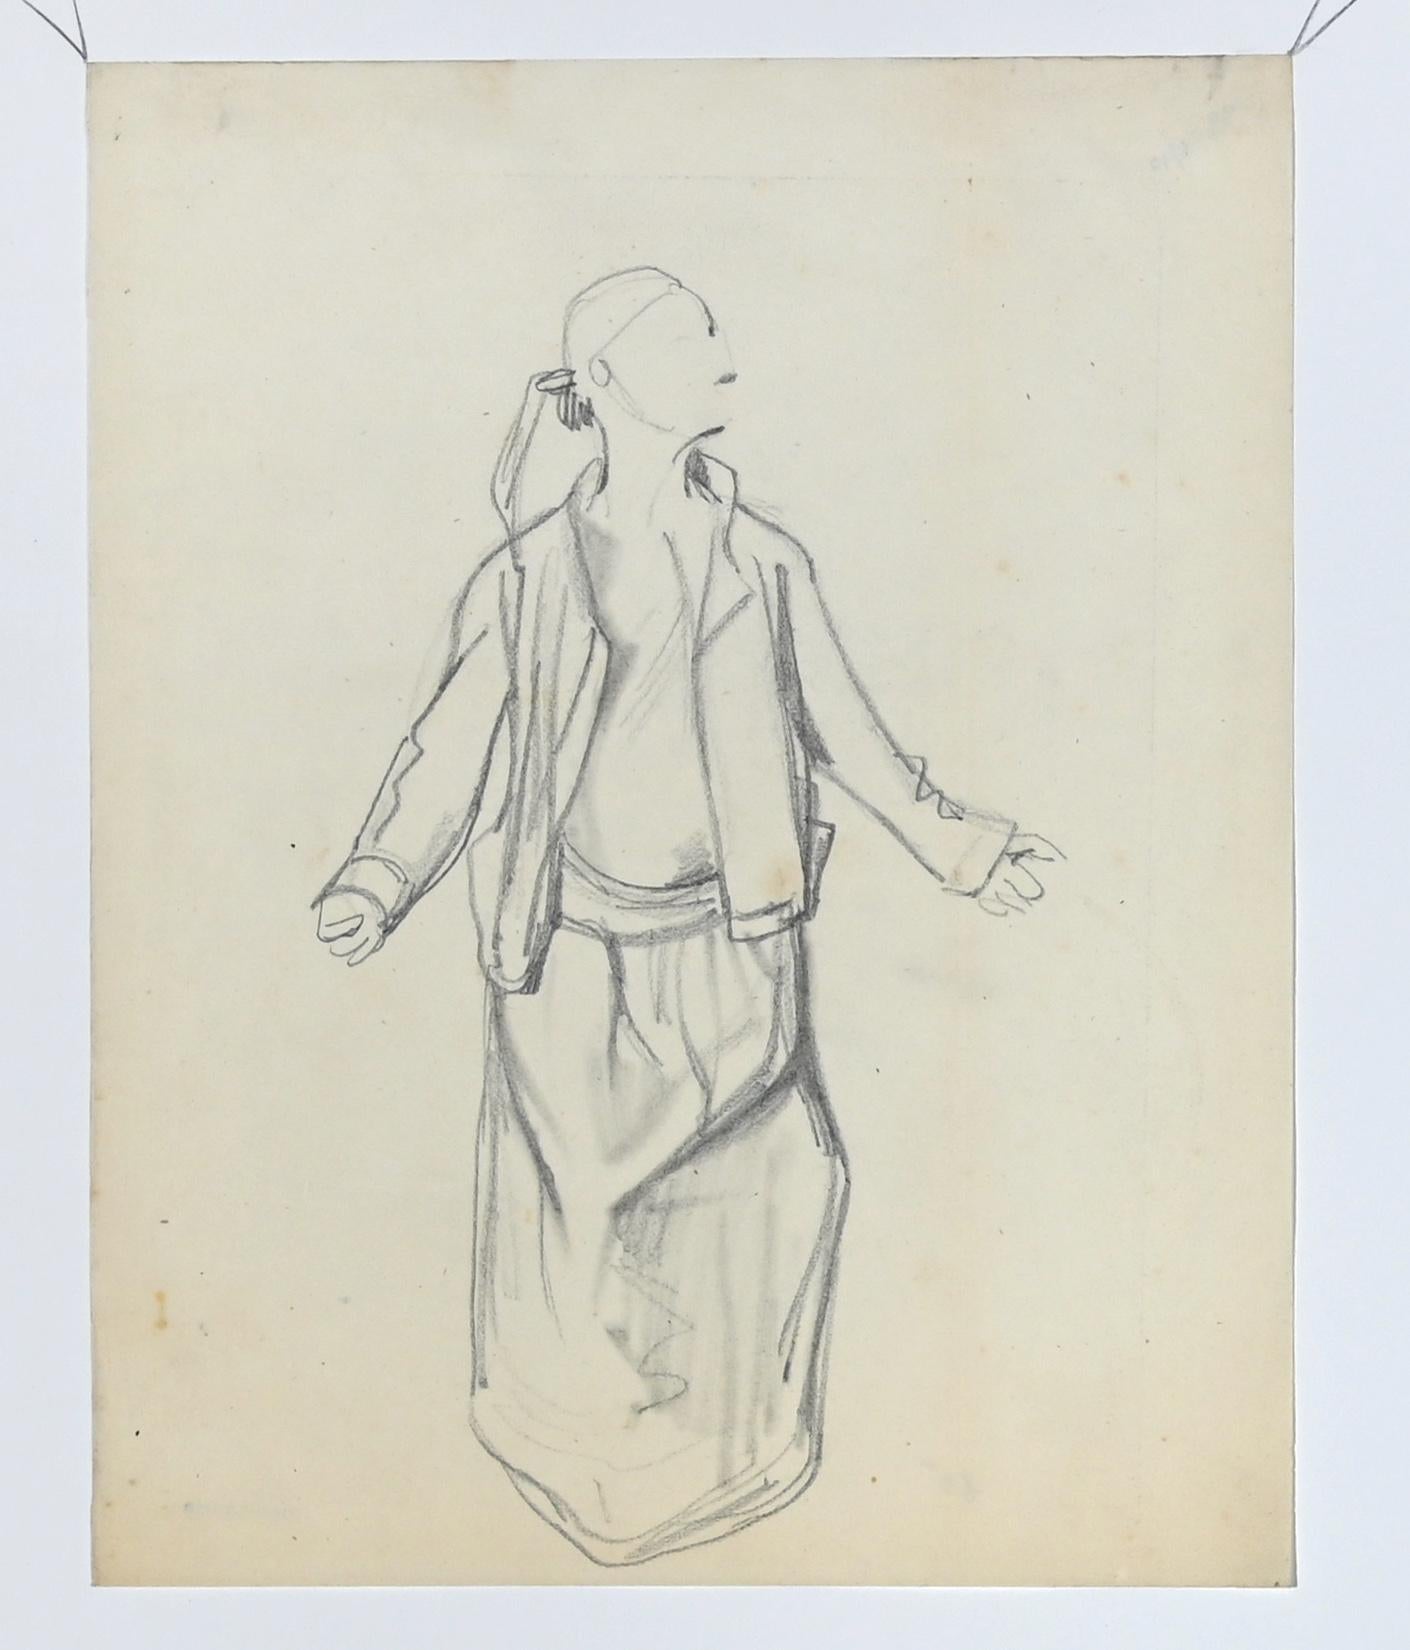 19th century figure drawings